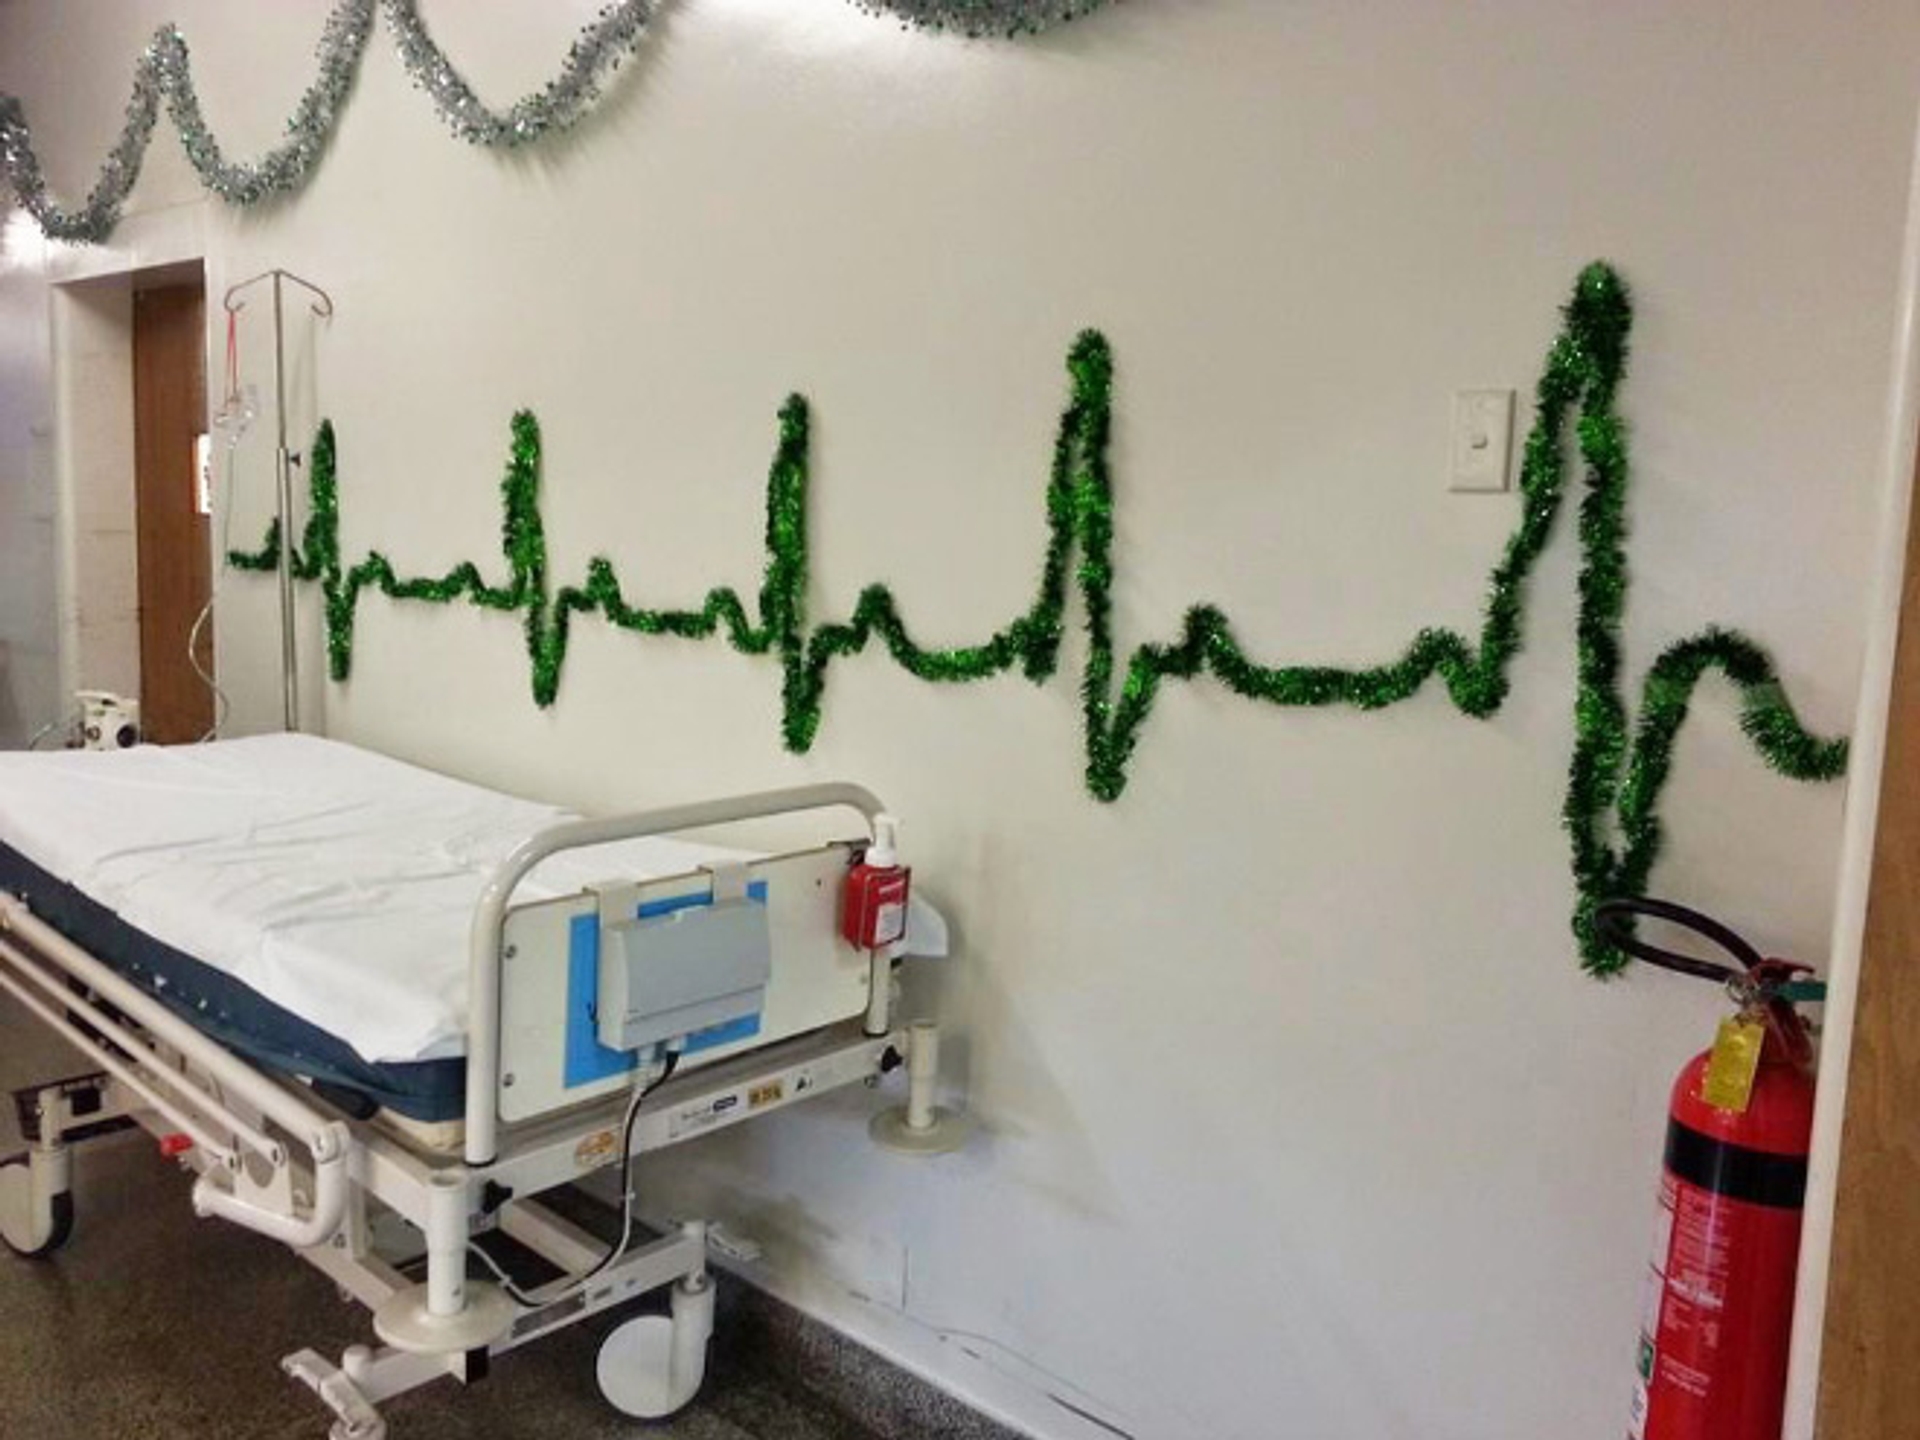 hospital-christmas-decorations2